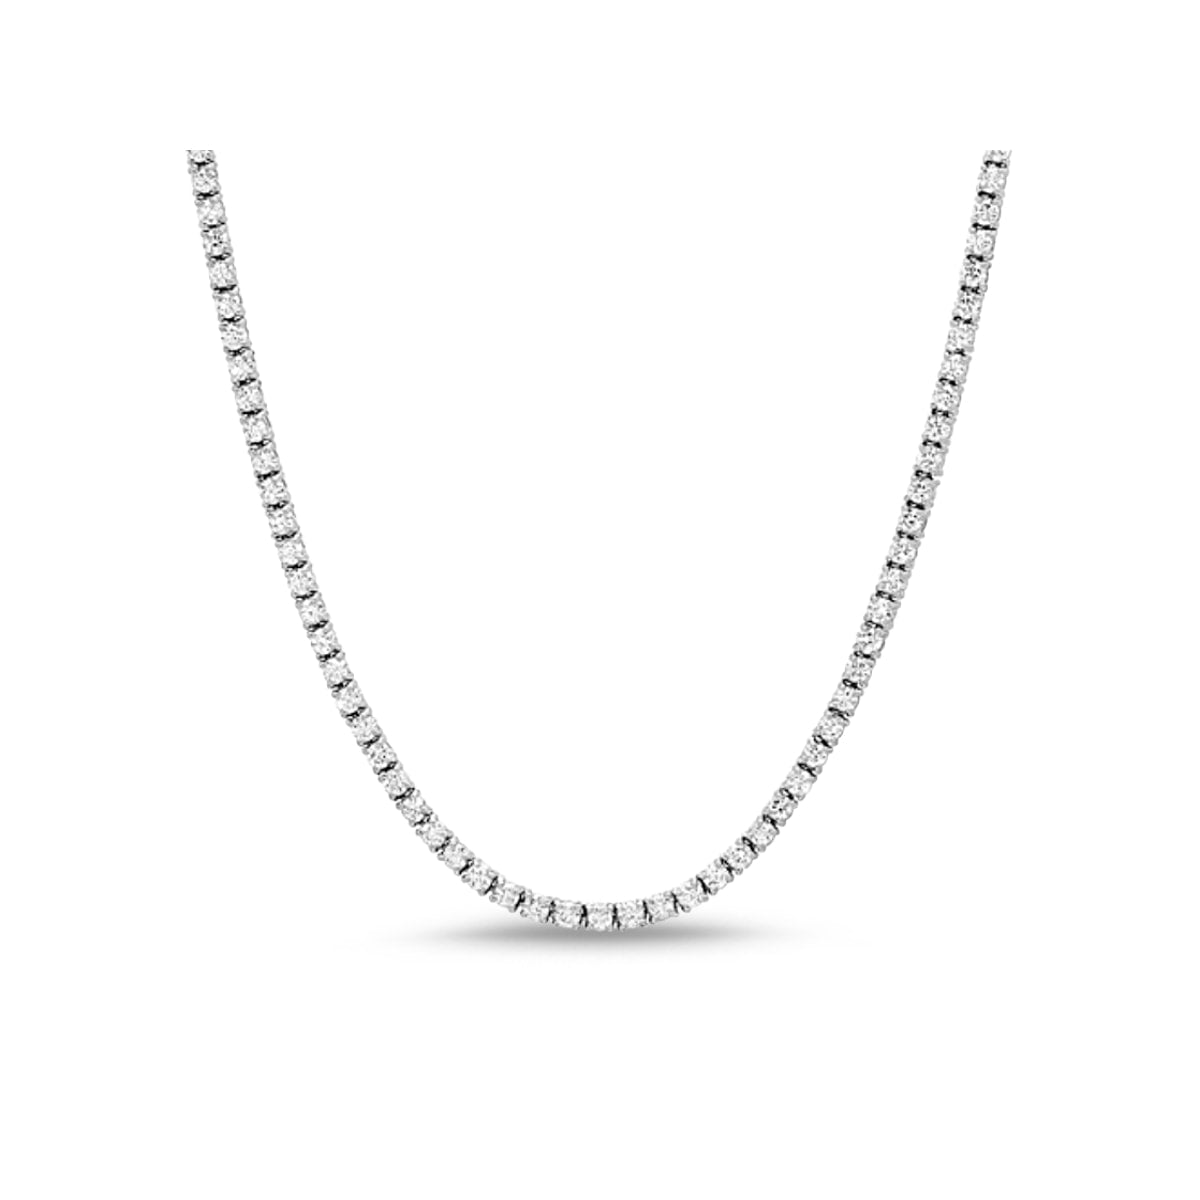 Monette 4 Prong Diamond Necklace in 18k White Gold Vermeil